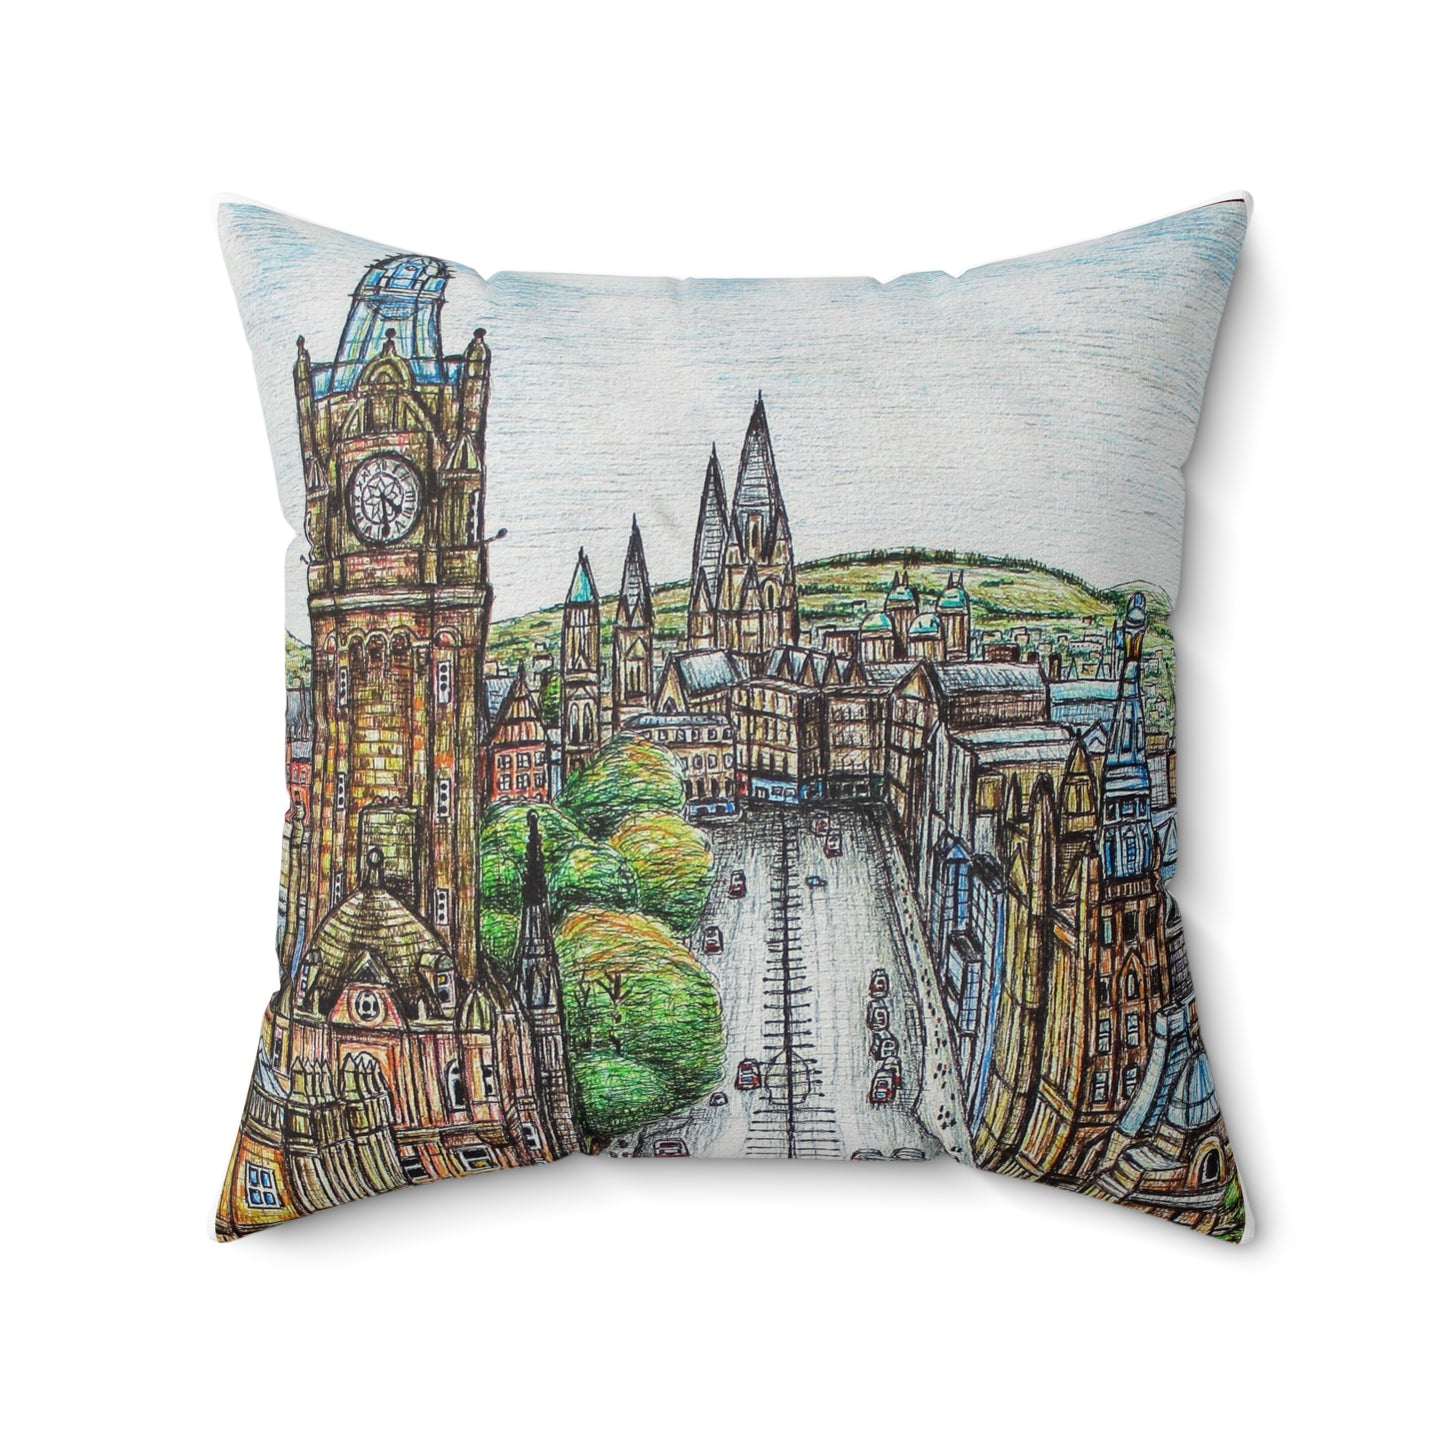 Indoor decorative cushion- Edinburgh Princes Street